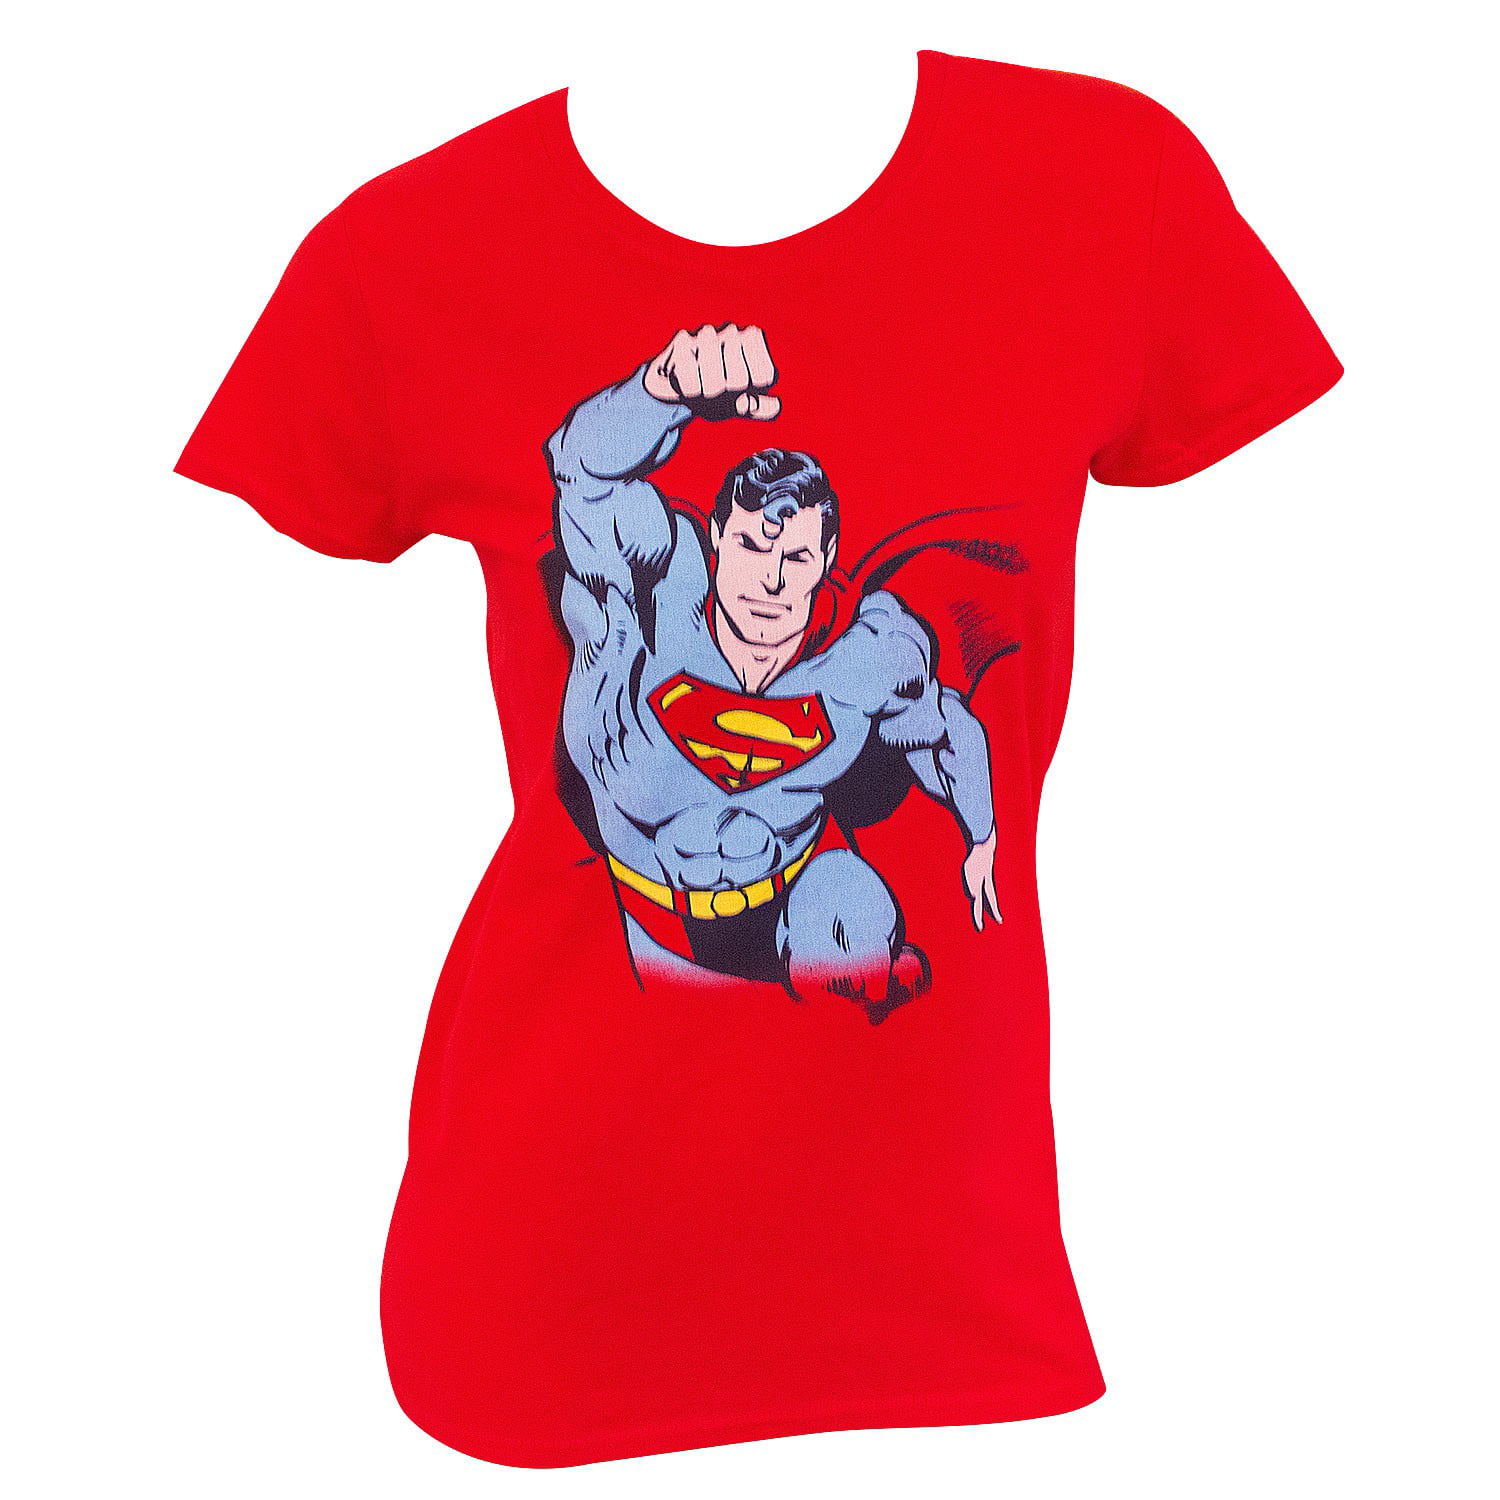 superman t shirt red